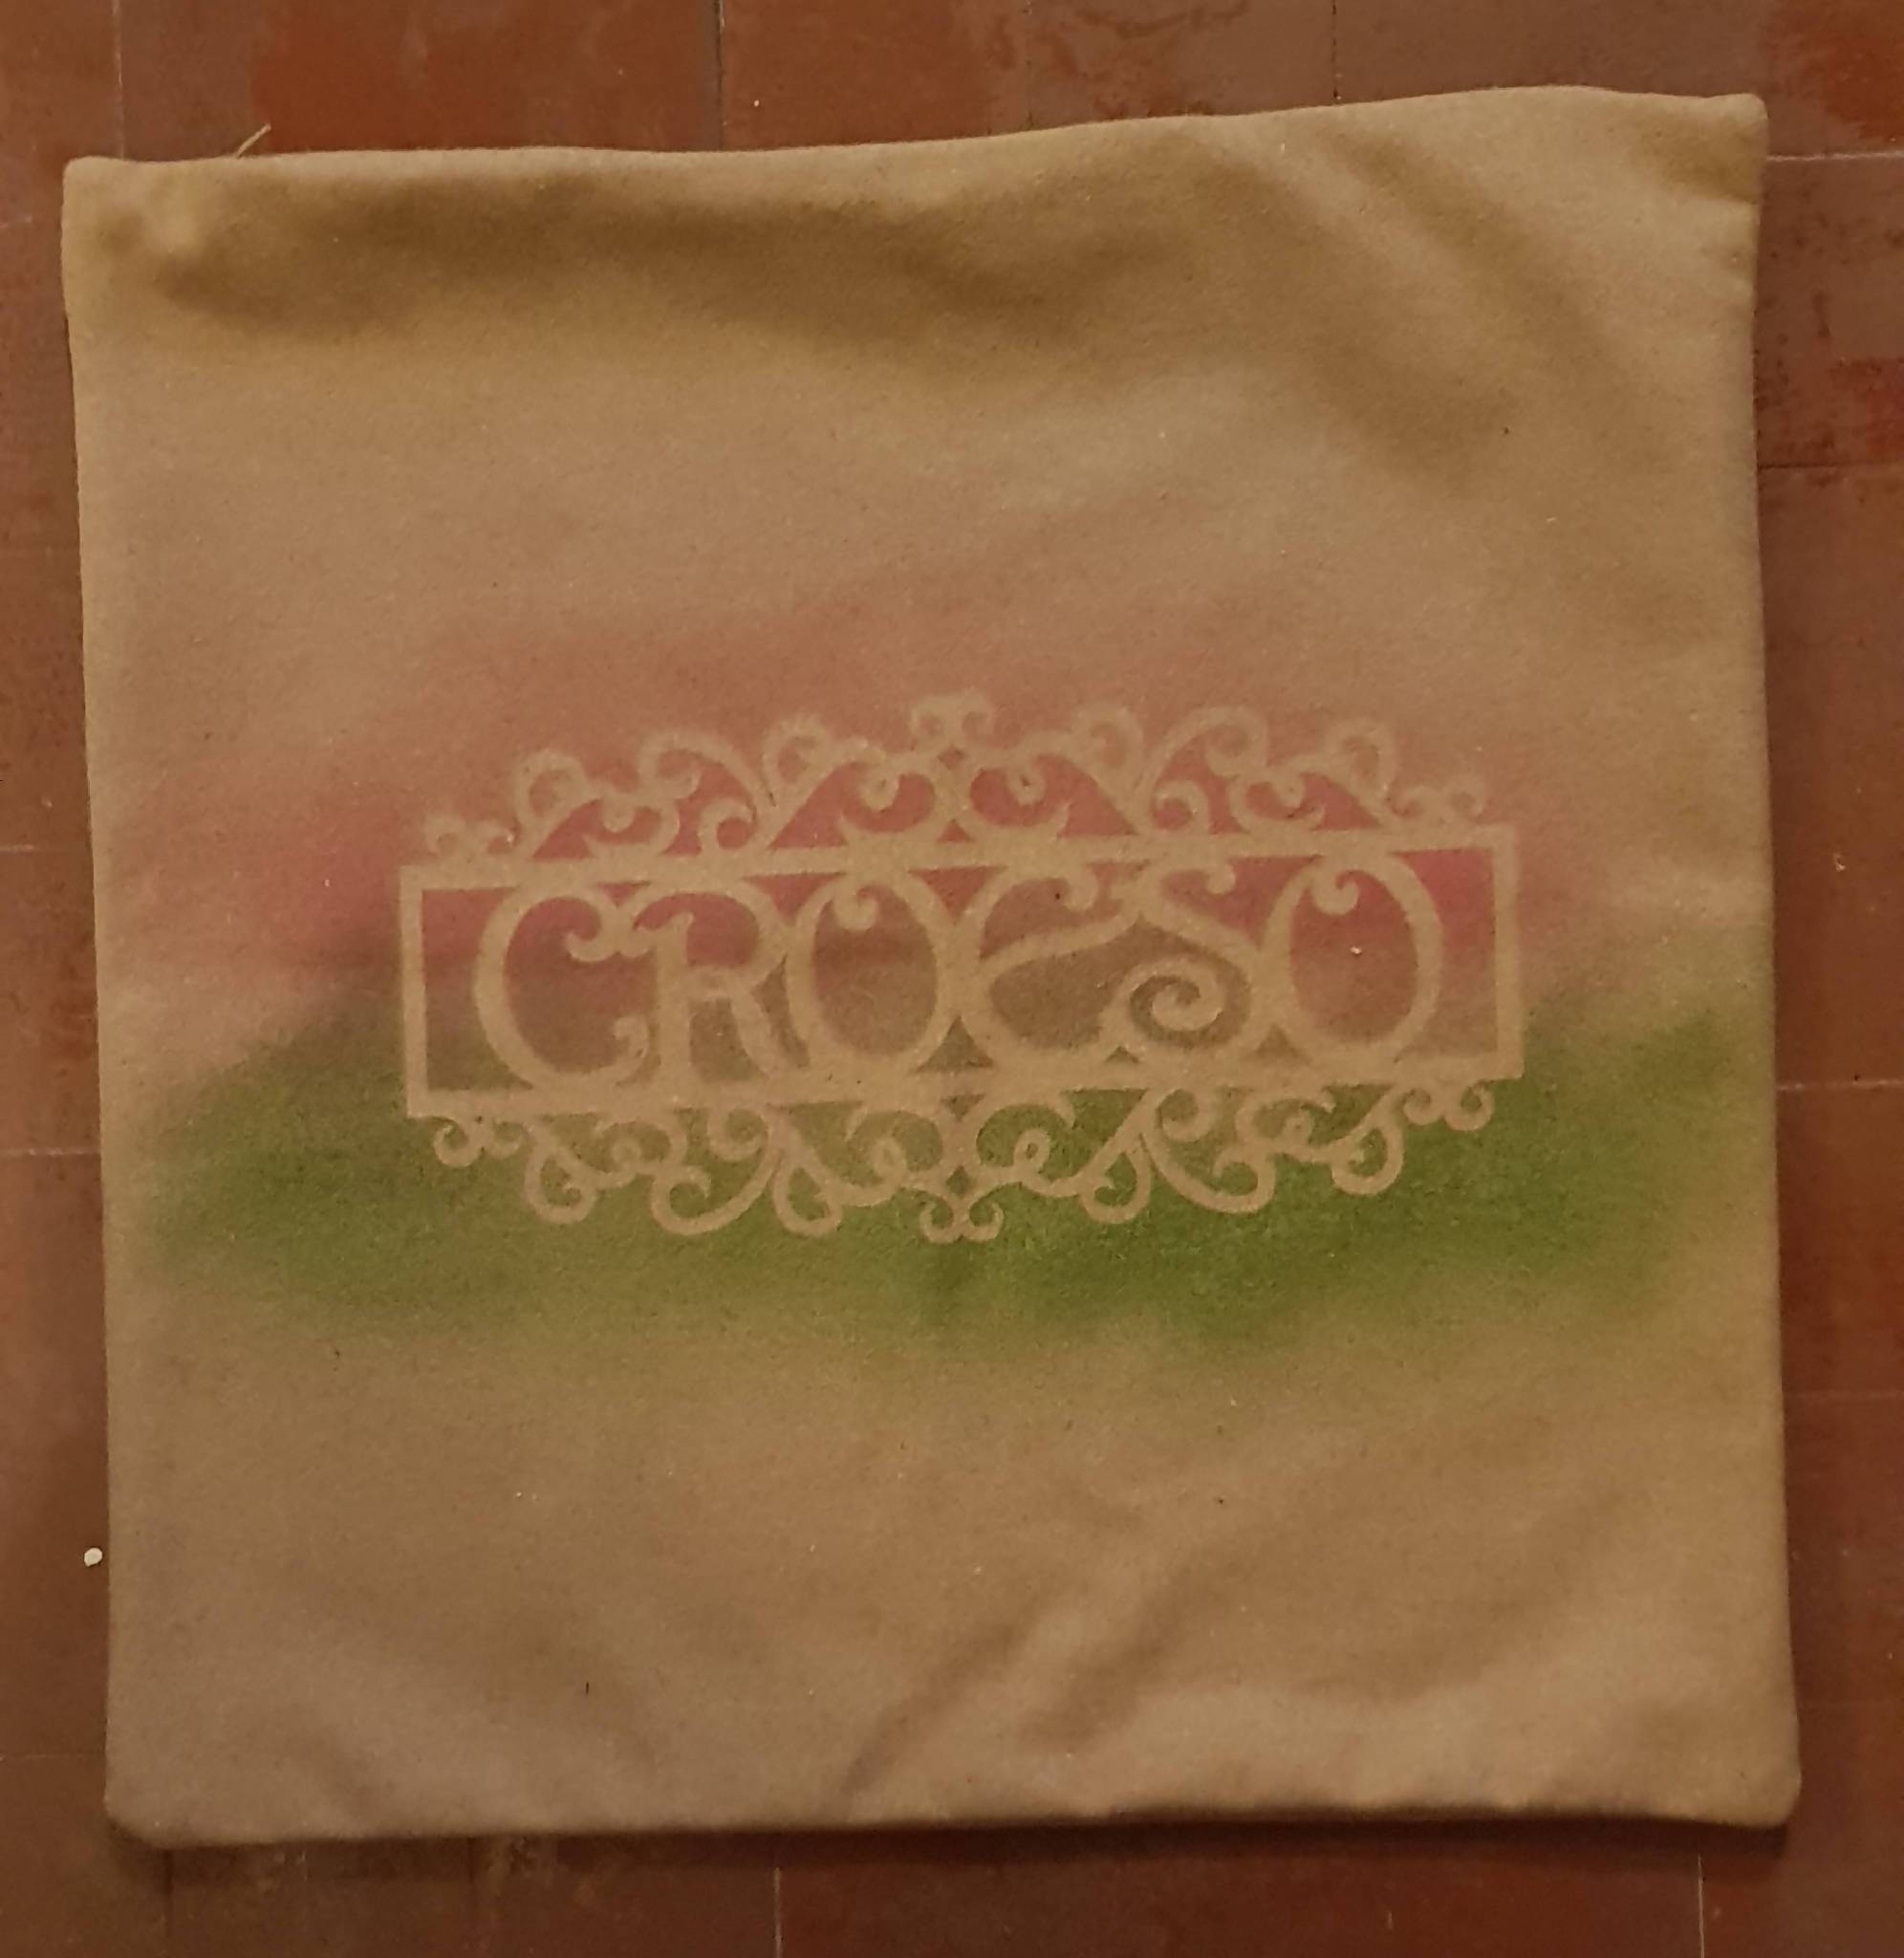 'Croeso' cushion cover